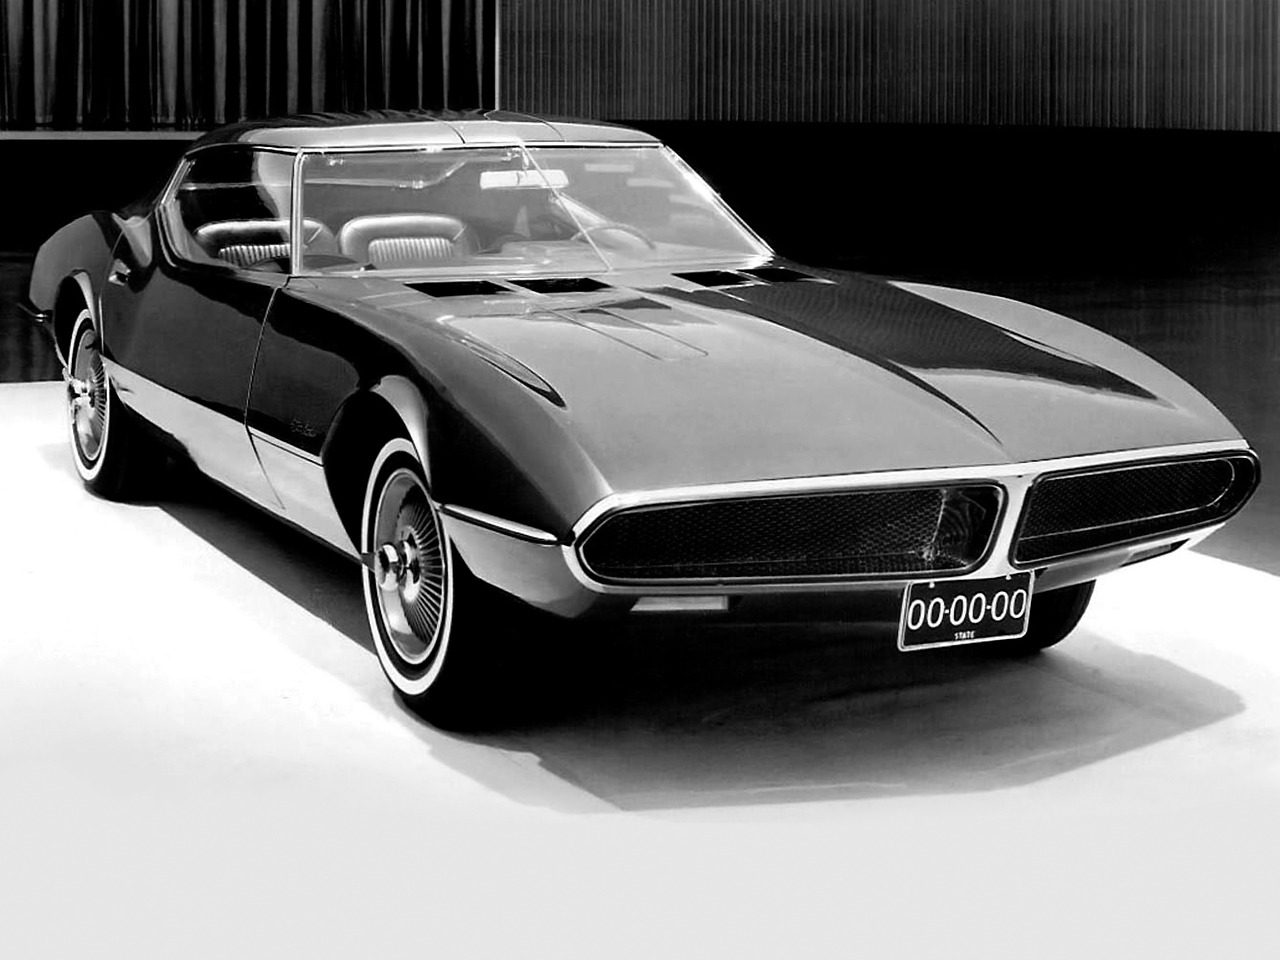 Pontiac Banshee XP798 Concept Car 1966 – Old Concept Cars